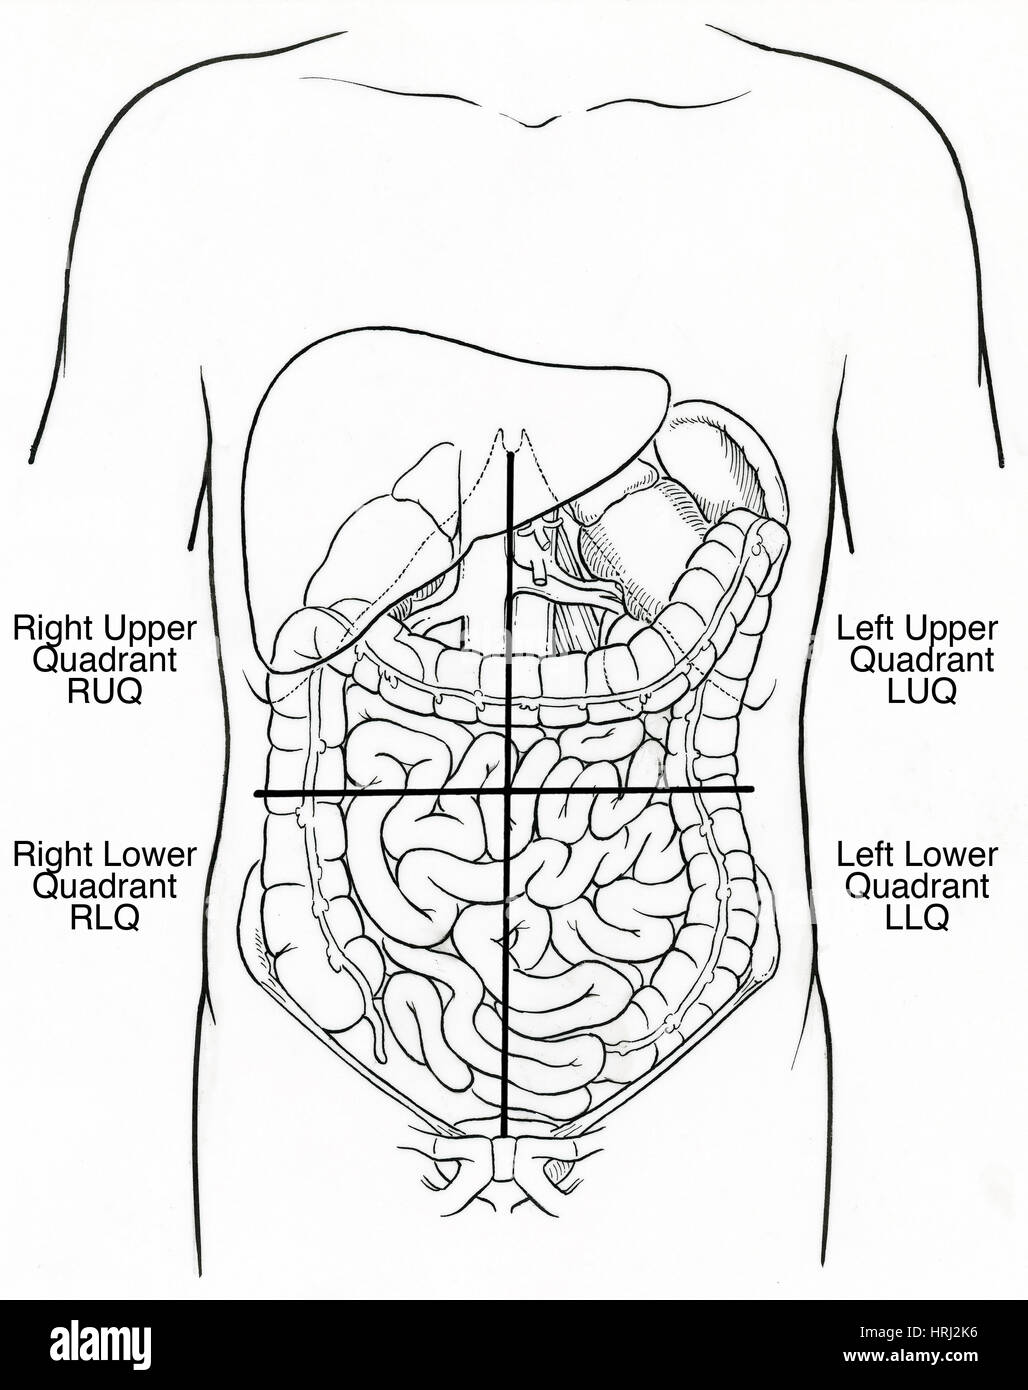 Illustration de quadrants abdominale Photo Stock - Alamy